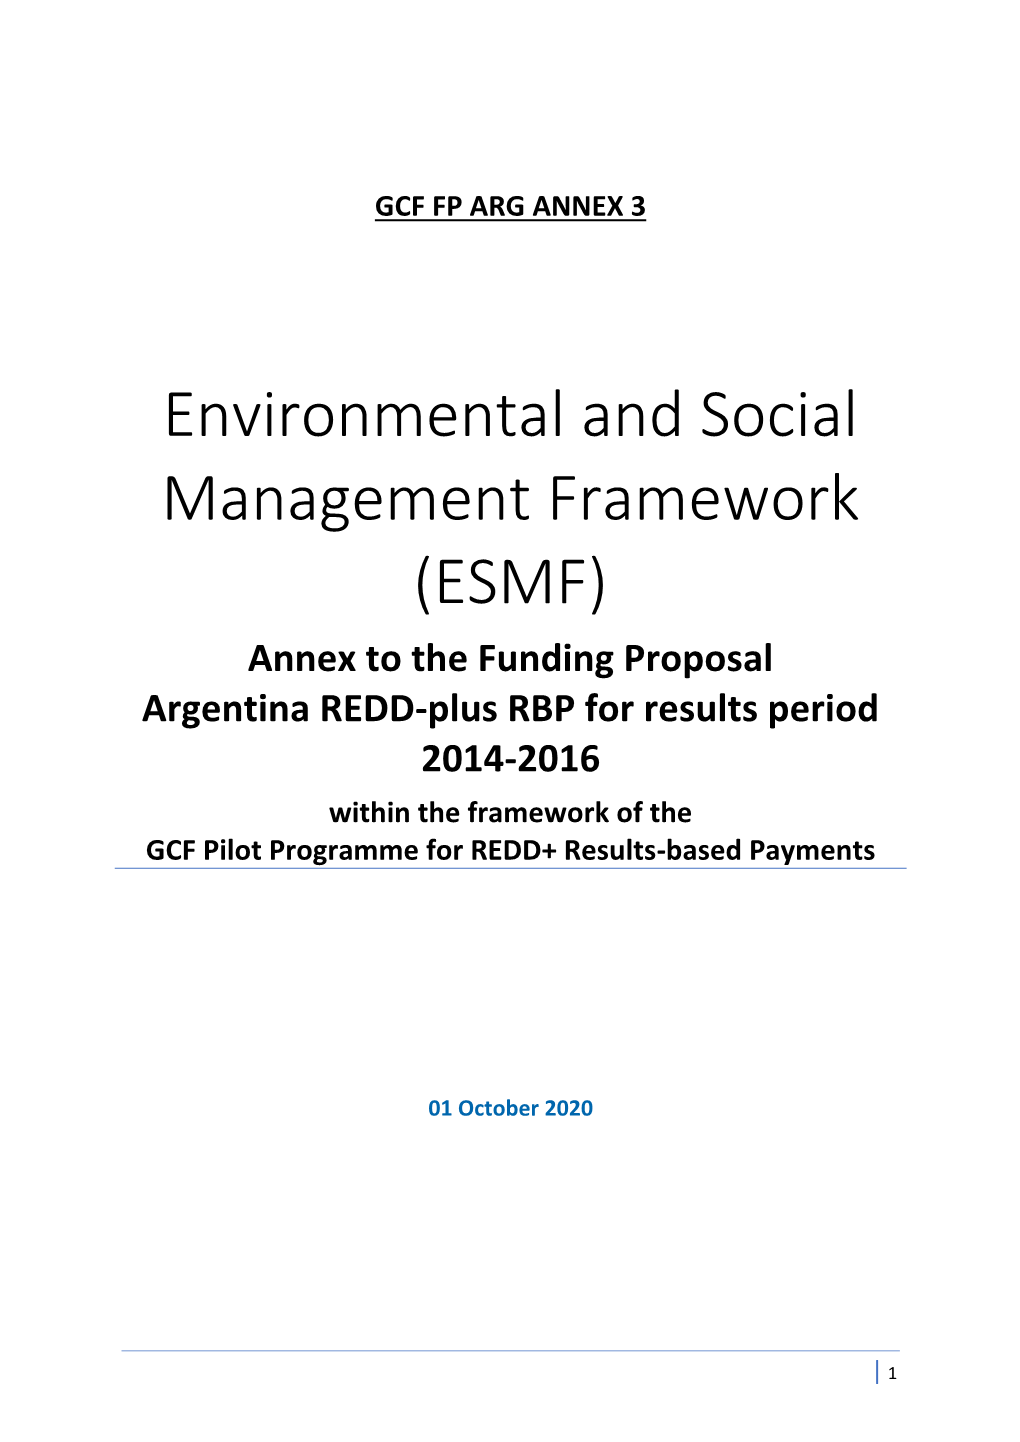 Environmental and Social Management Framework (ESMF)